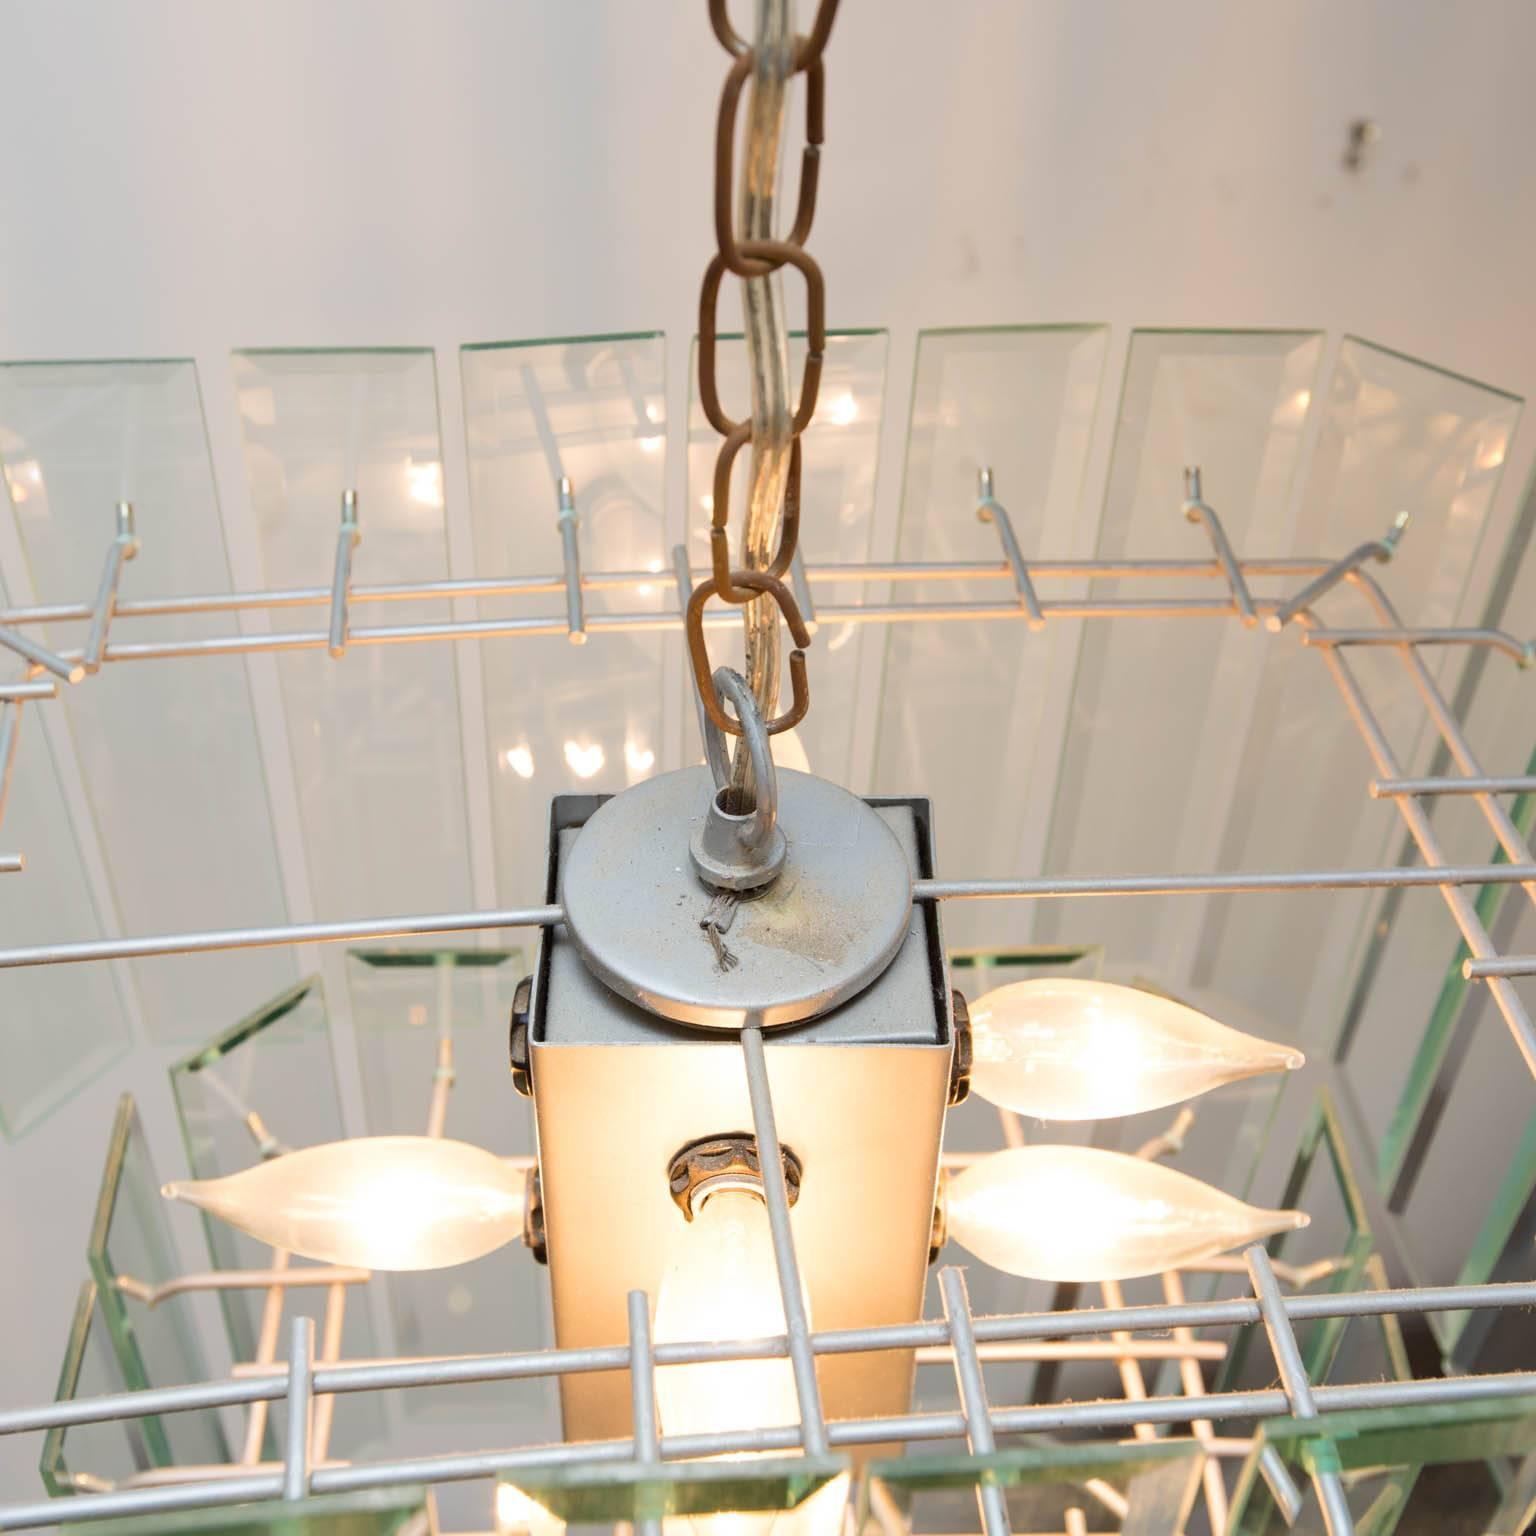 Vintage chandelier made up of 40 vertical, bevelled-glass prisms: 24 on top tier, 16 on lower tier.